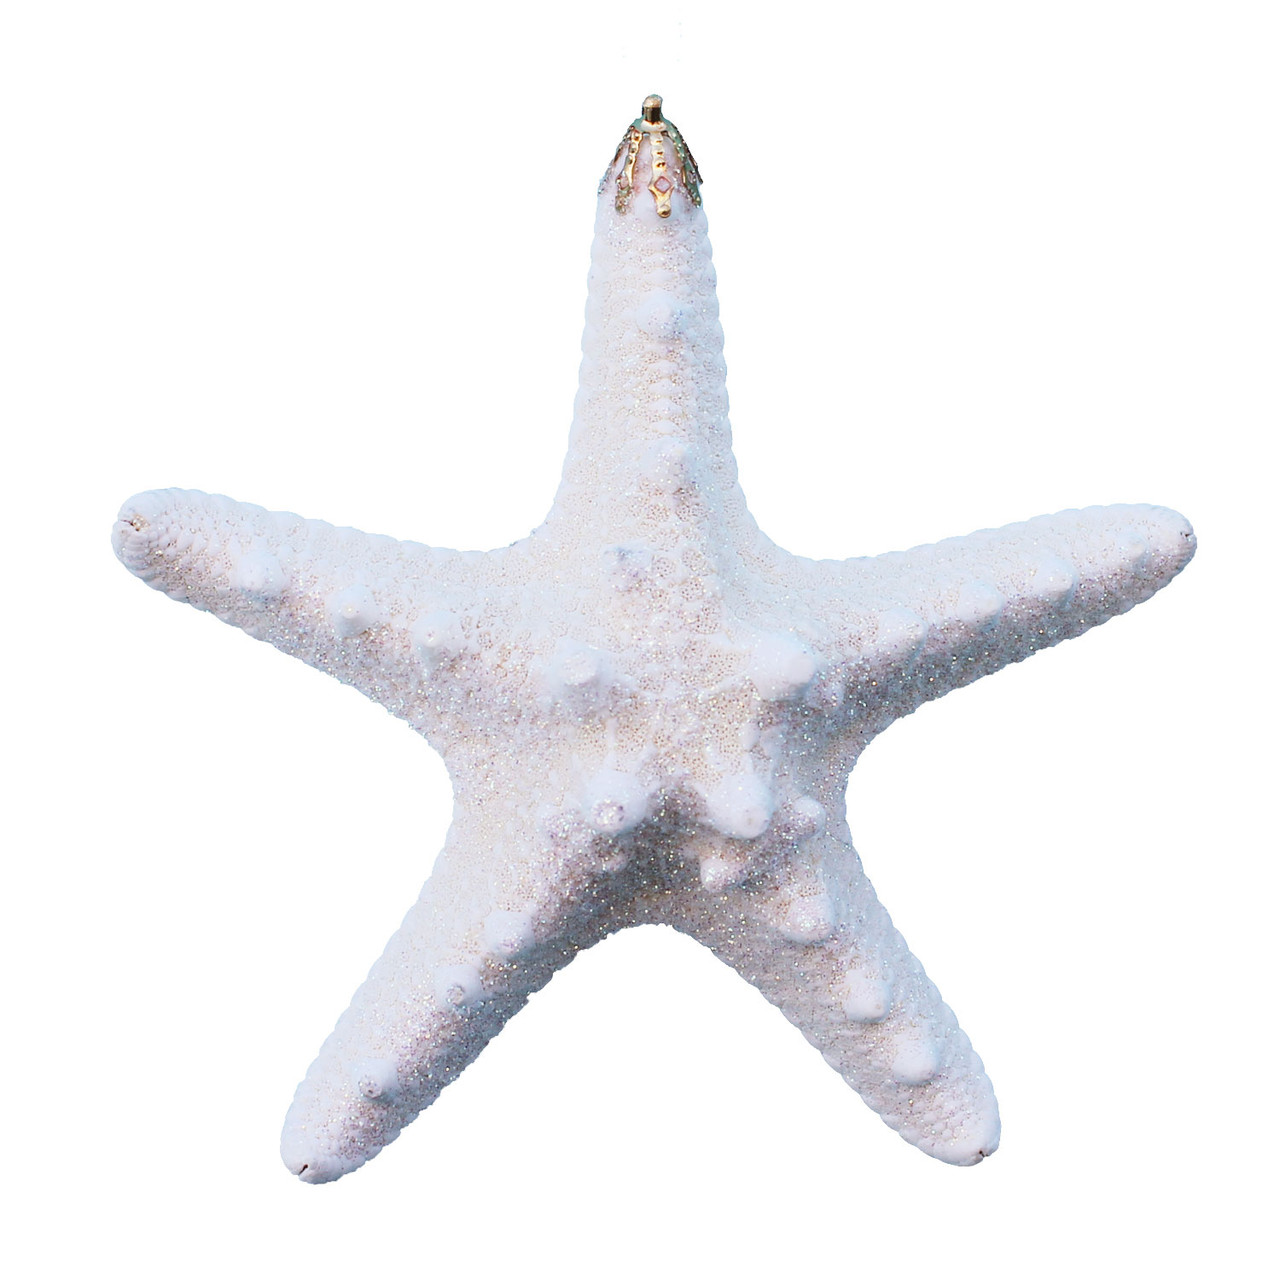 https://cdn11.bigcommerce.com/s-36f60/images/stencil/1280x1280/products/1419/15371/3D-large-white-bumpy-starfish-glitter-ornament__23181.1582586161.jpg?c=2